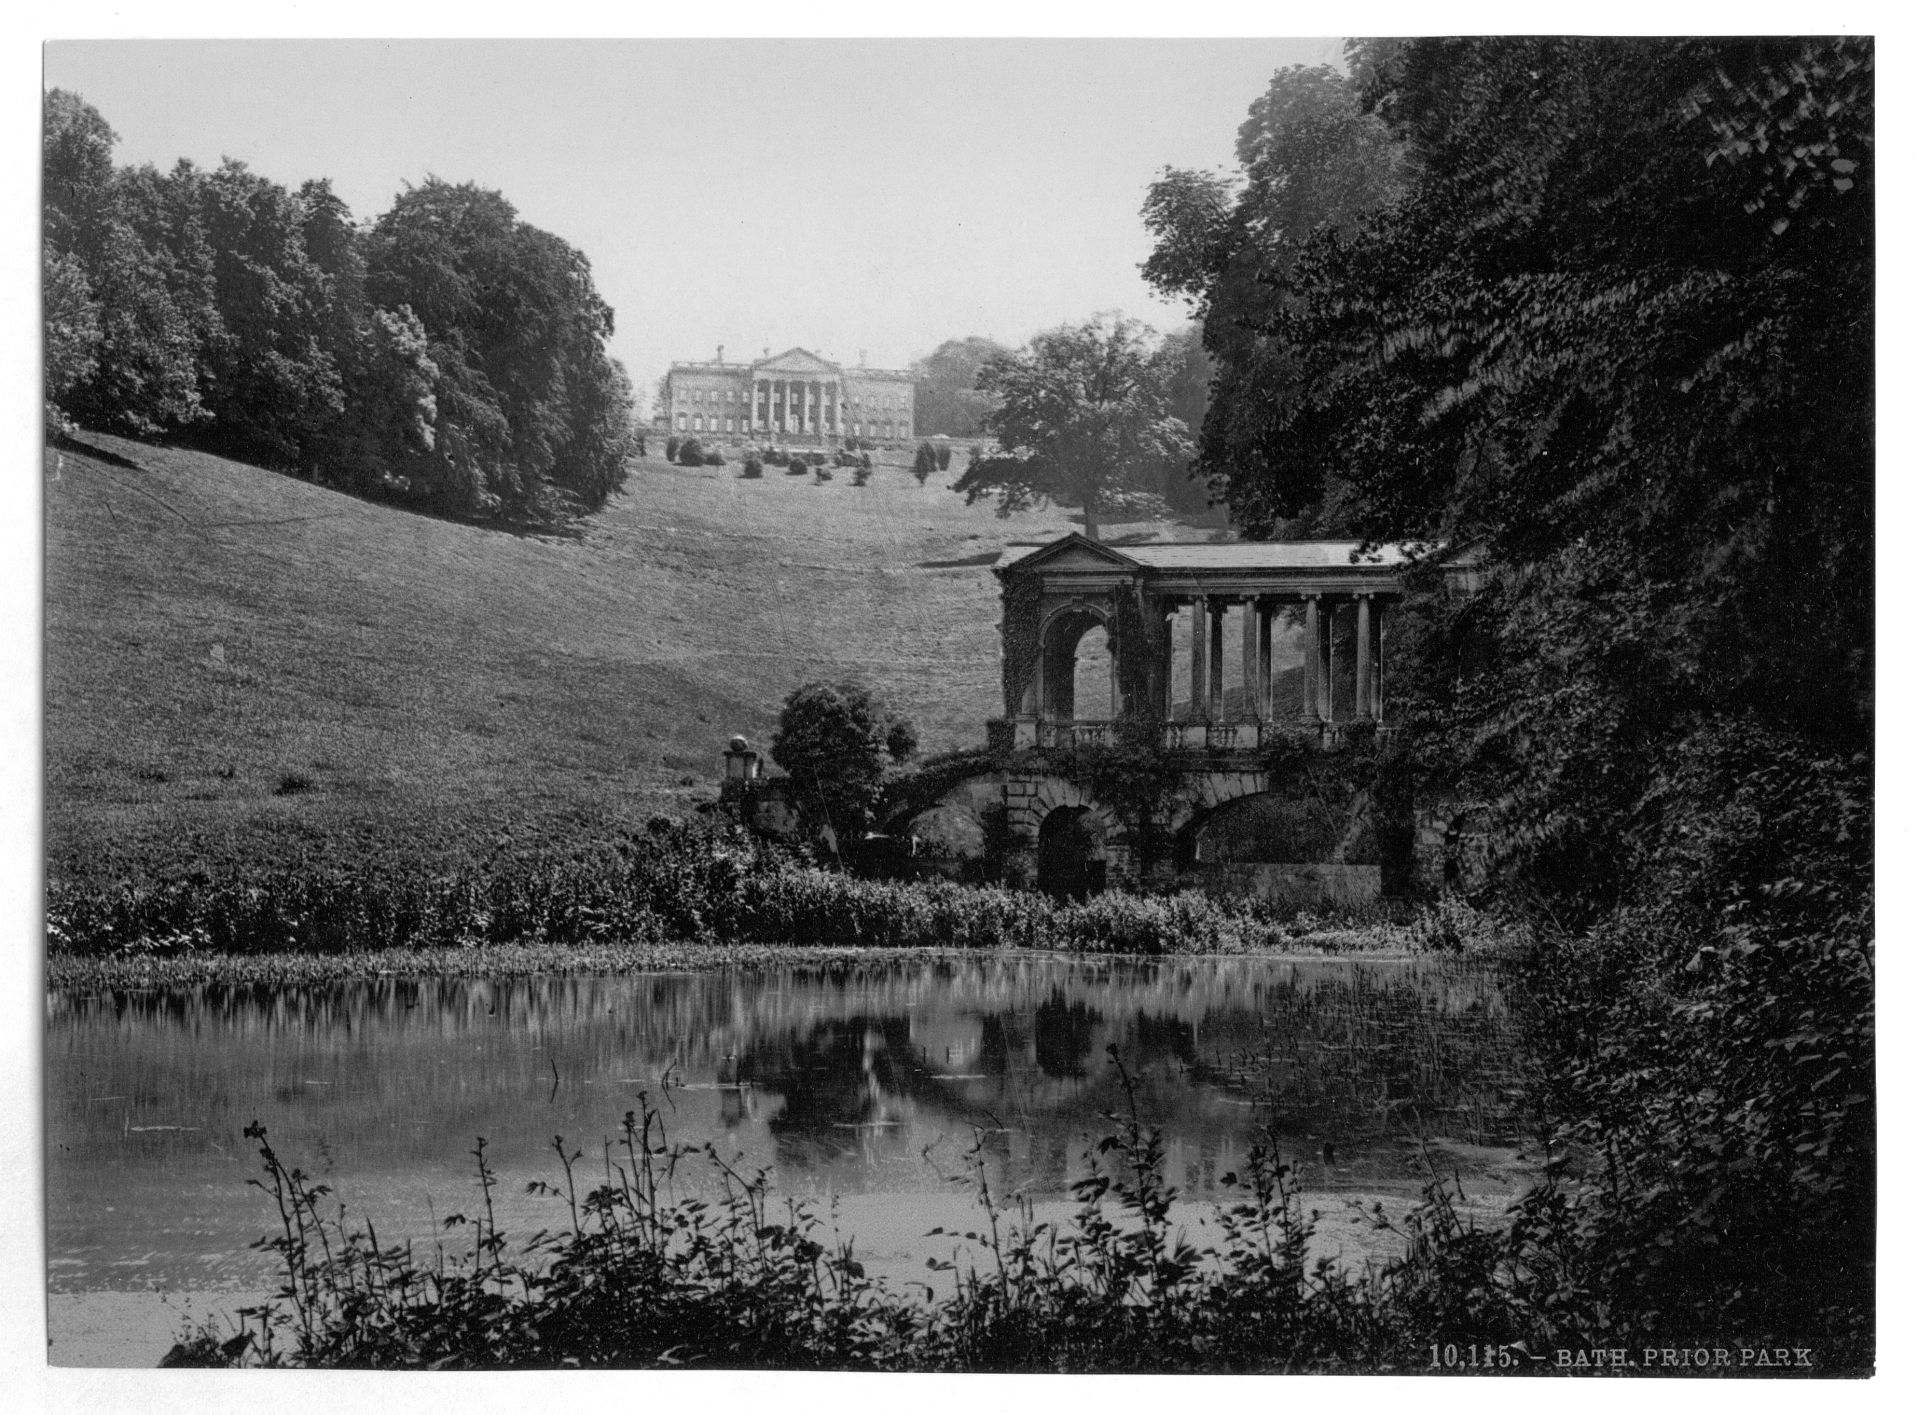 Prior Park College with Palladi[a]n Bridge, Bath, England